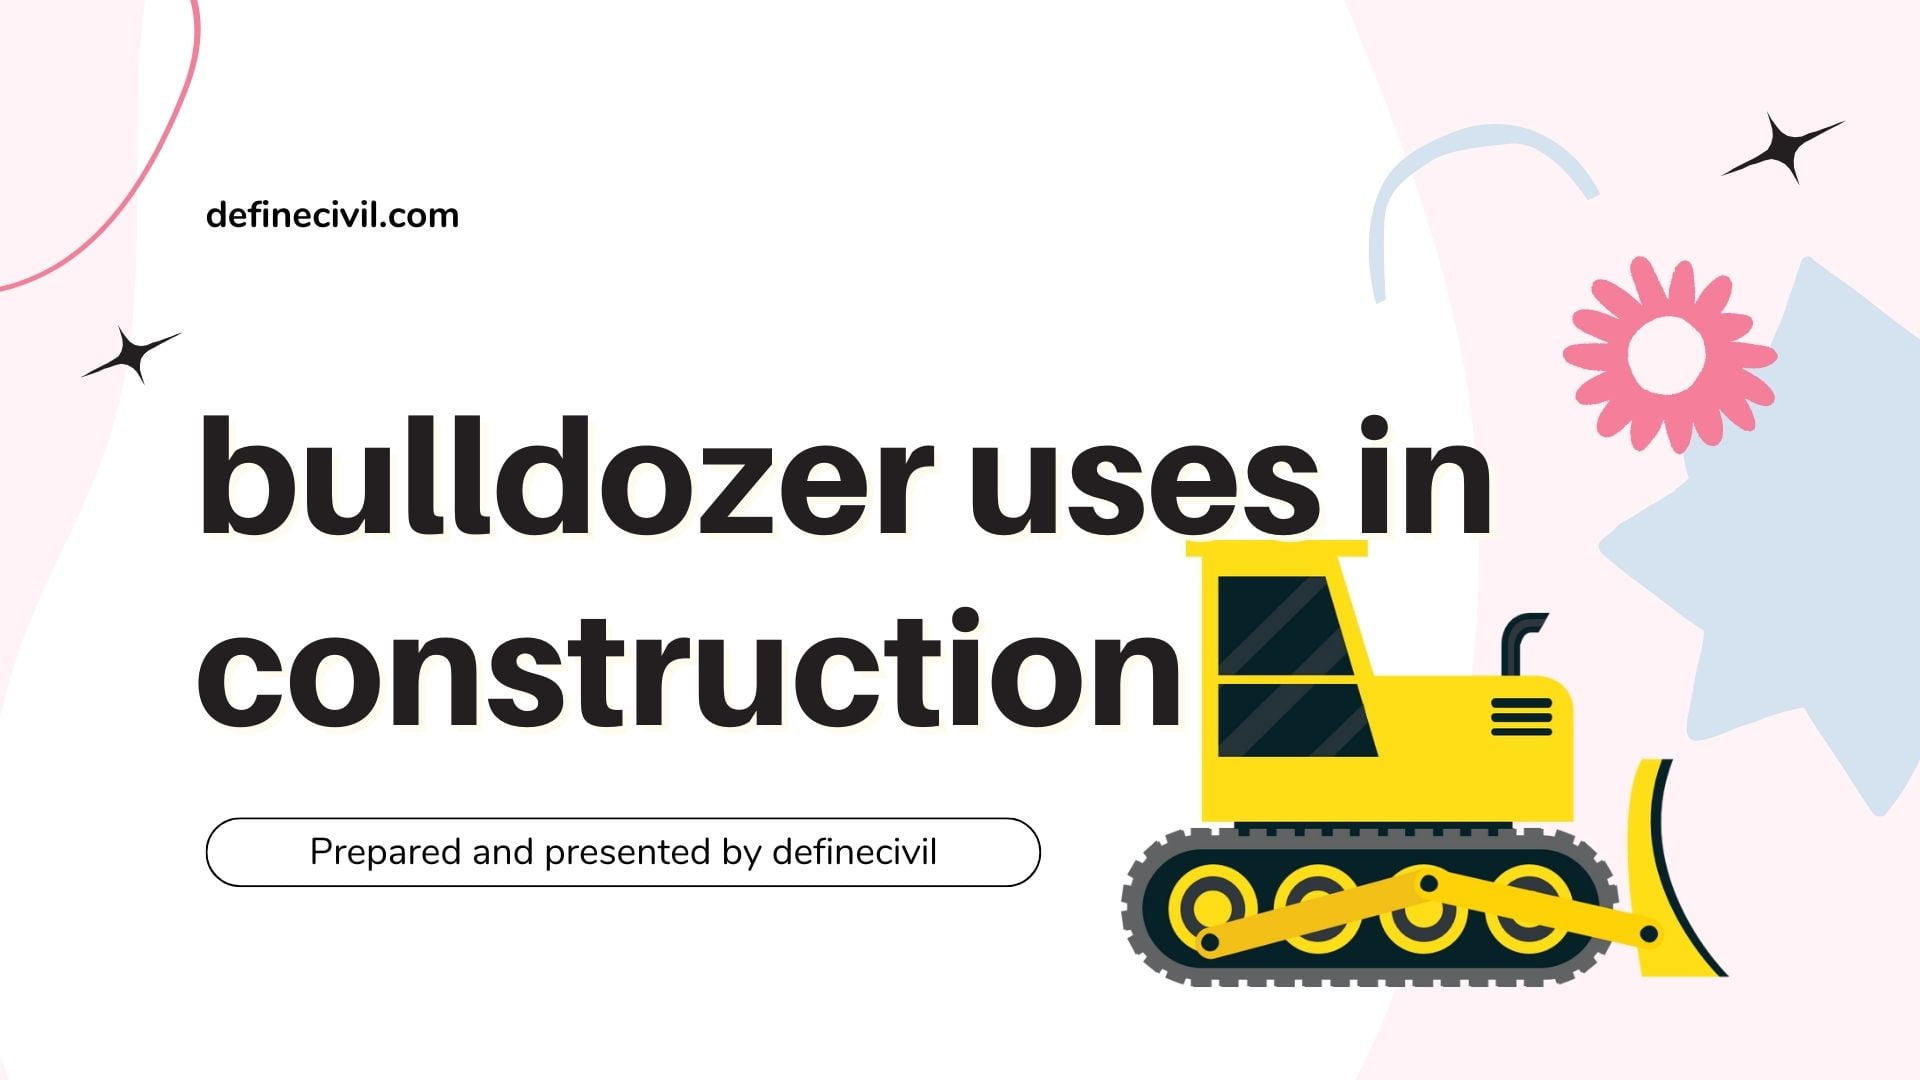 bulldozer-uses-in-construction